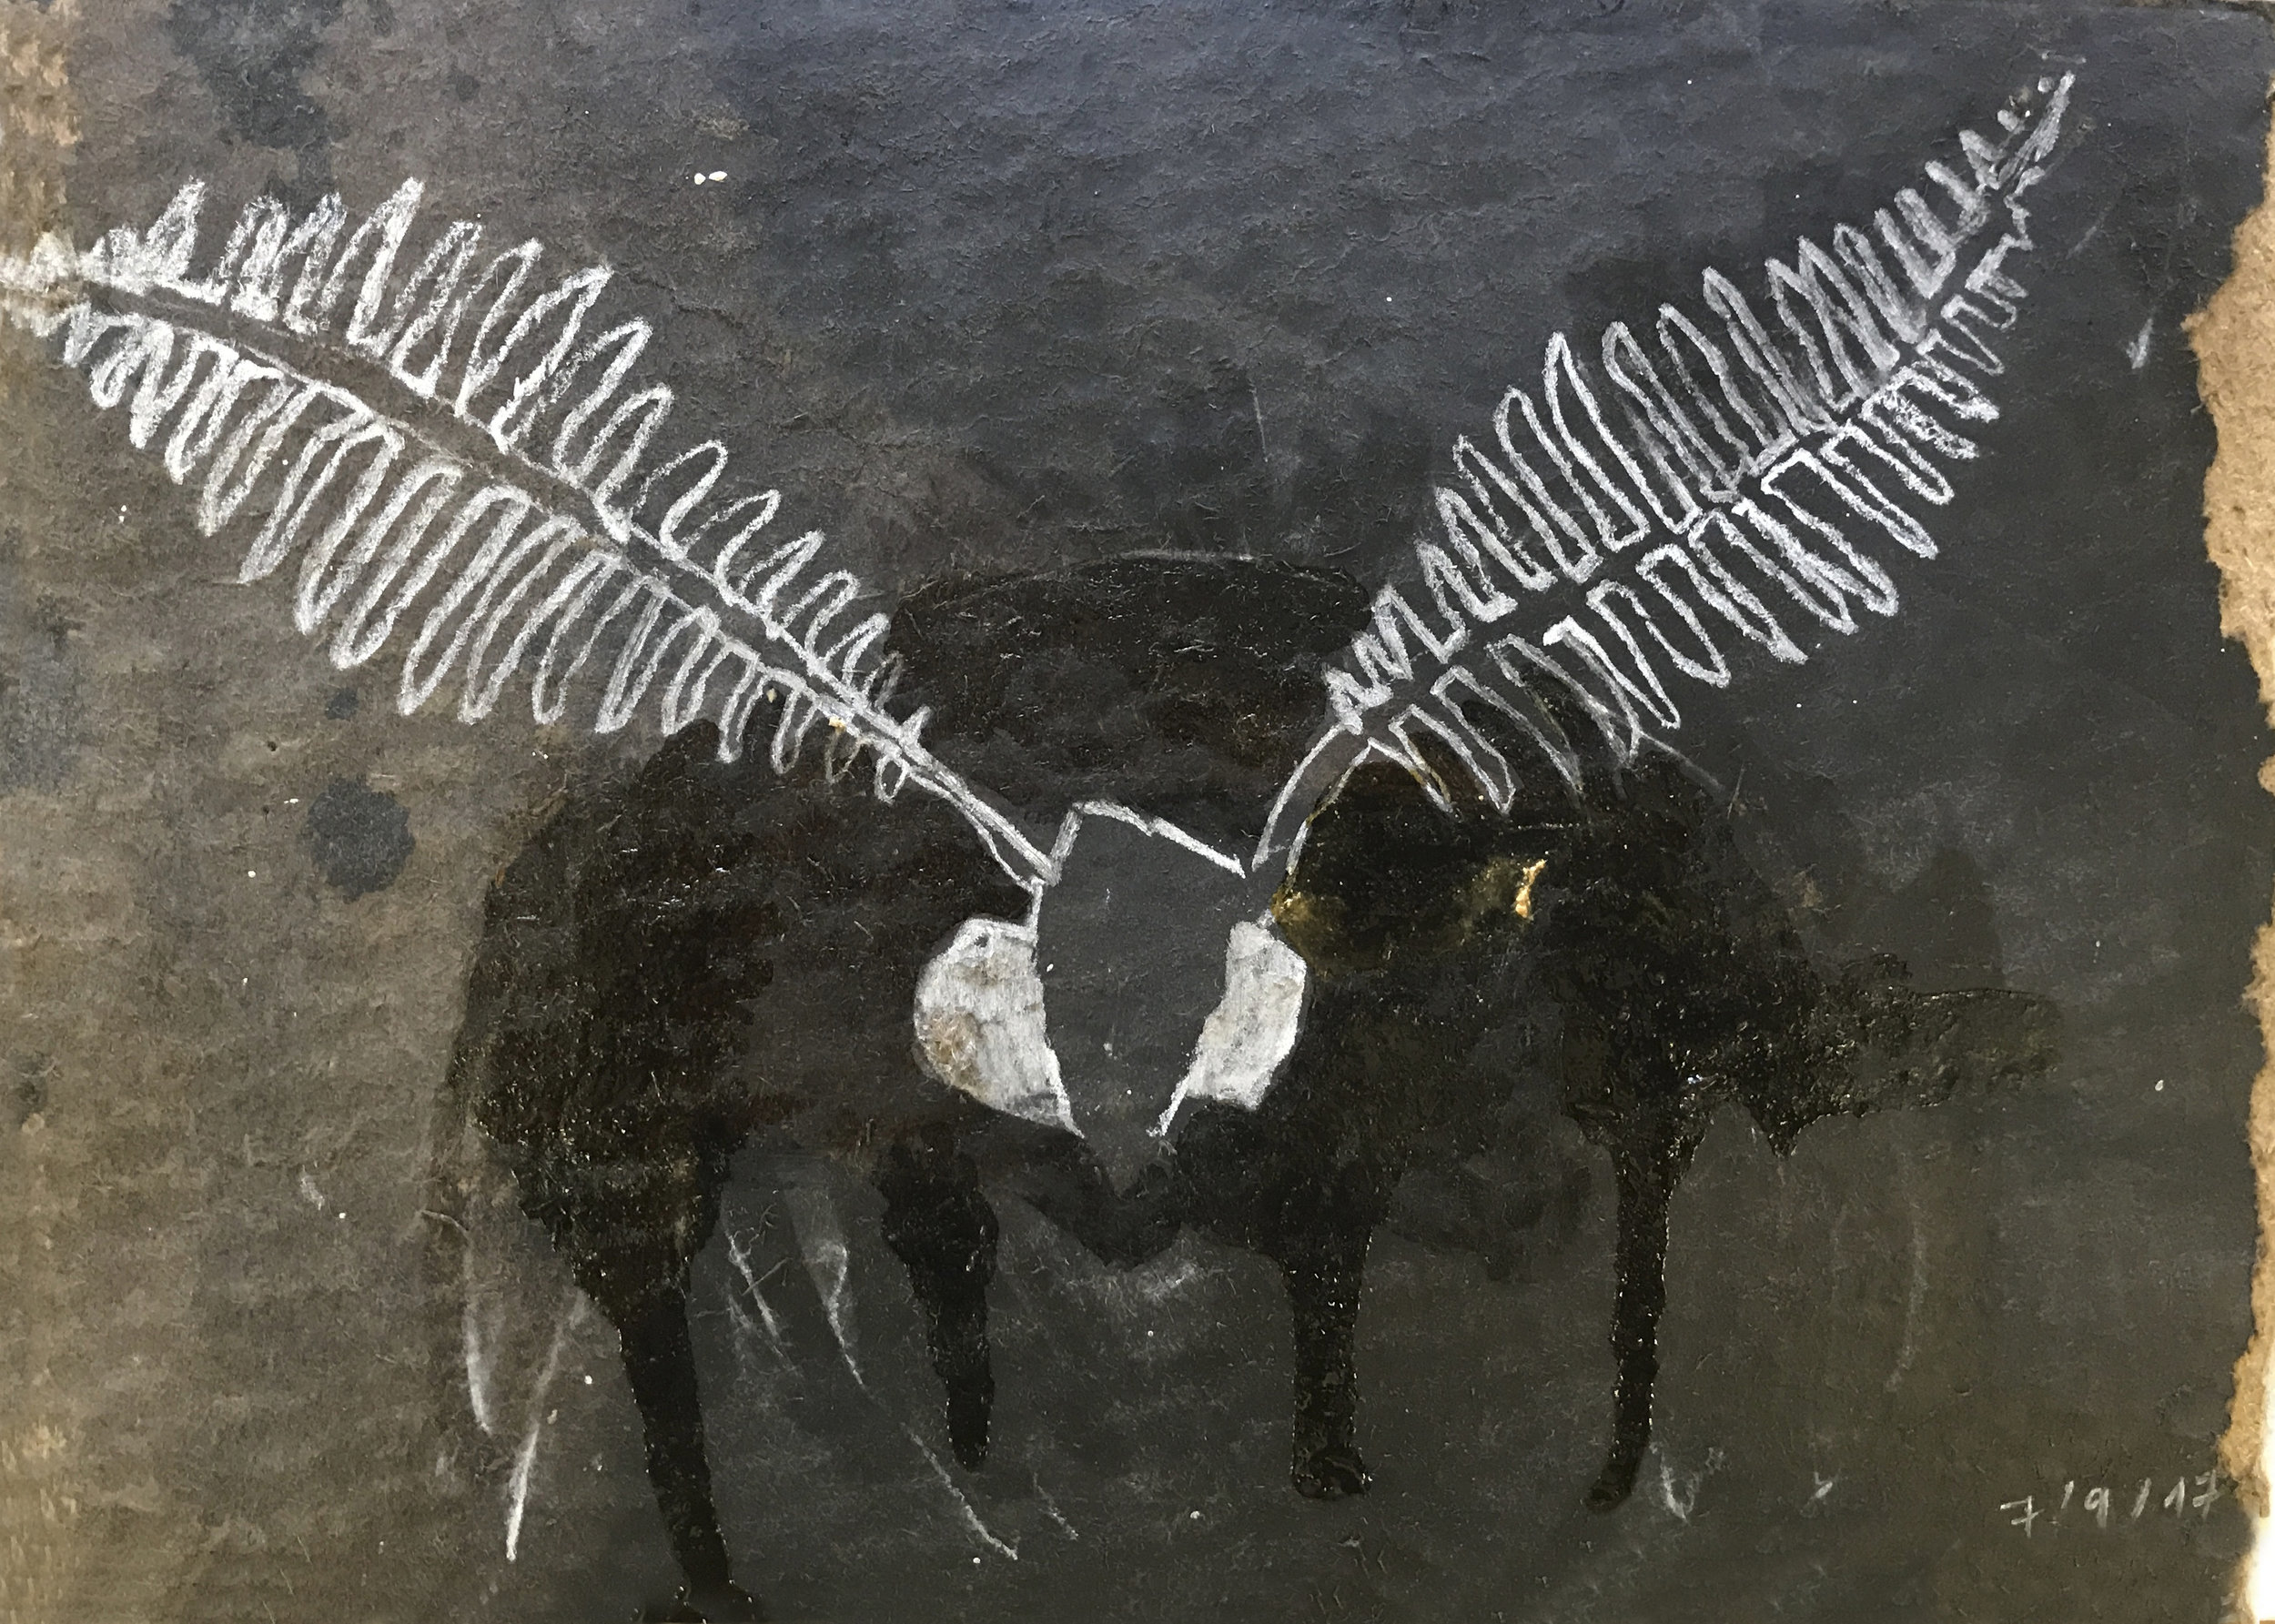 Insect, Mischtechnik auf Papier, 35x12 cm, 2018